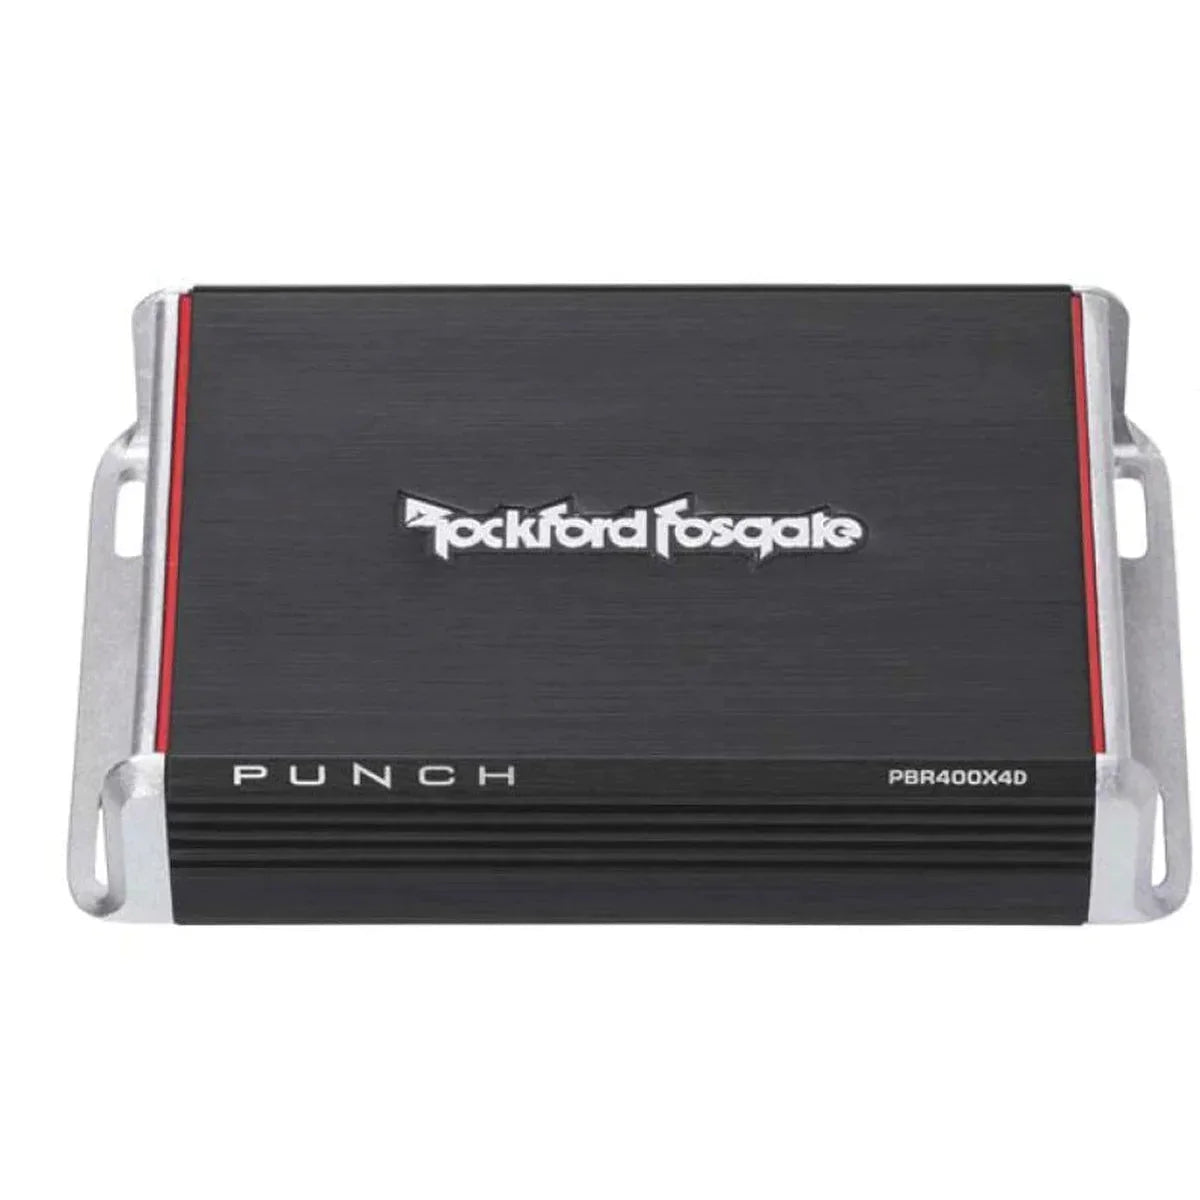 Rockford Fosgate-Punch PBR400x4D-4-Kanal Verstärker-Masori.de